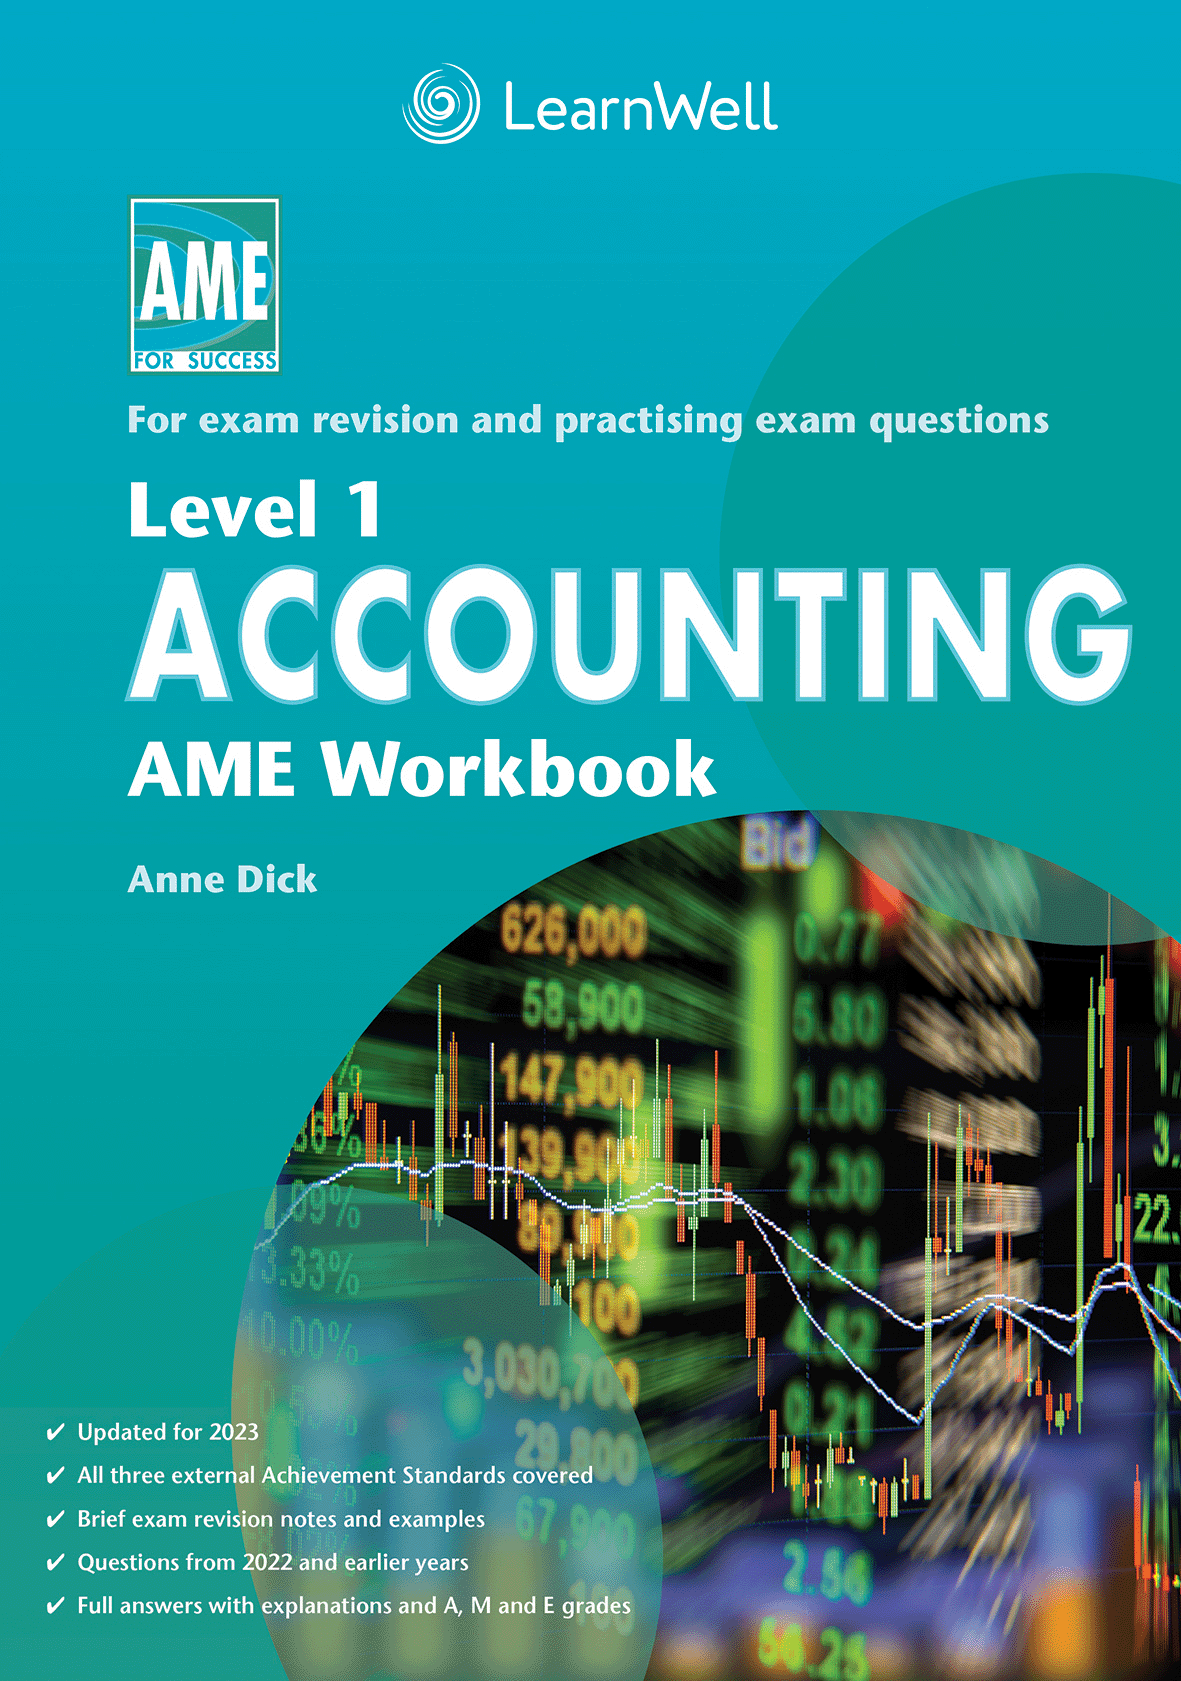 Level 1 Accounting AME Workbook